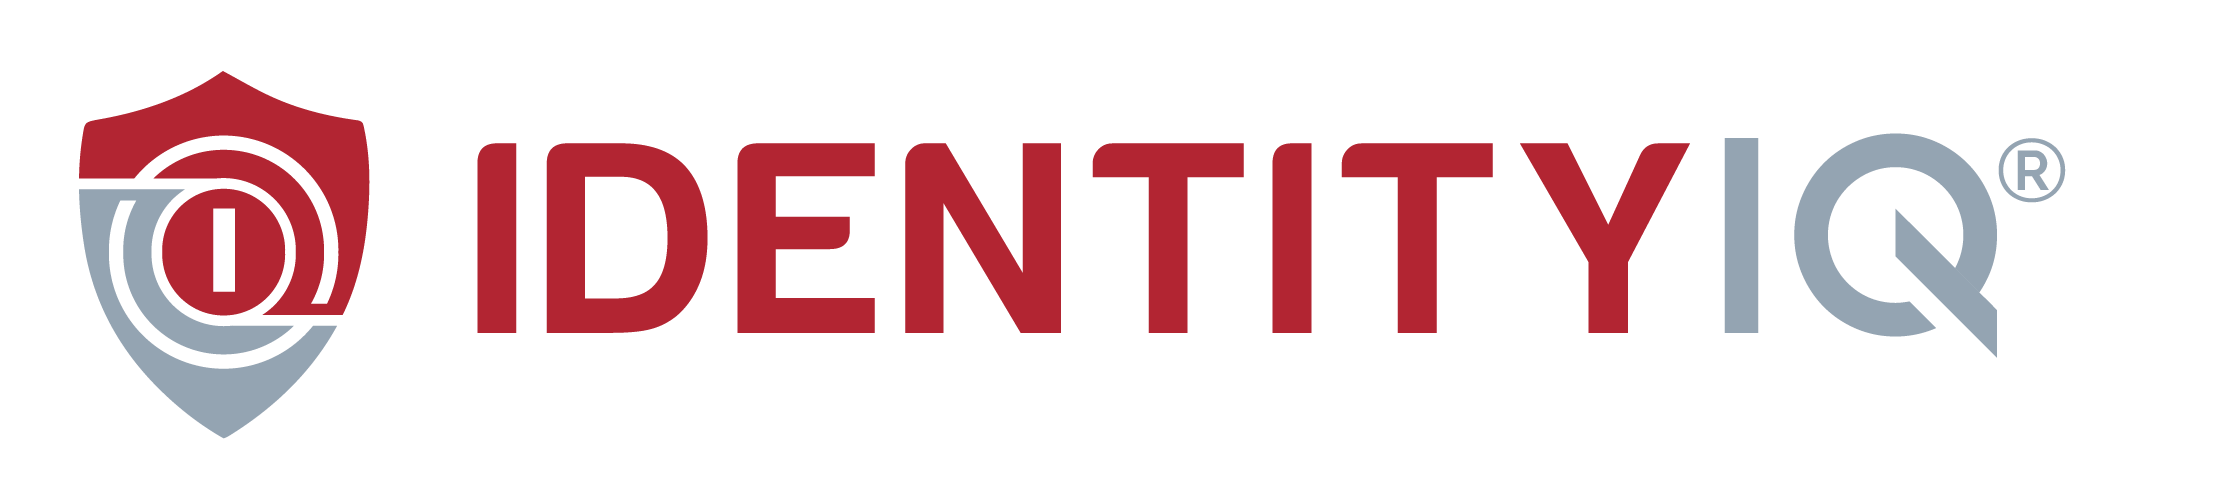 IdentityIQ logo.